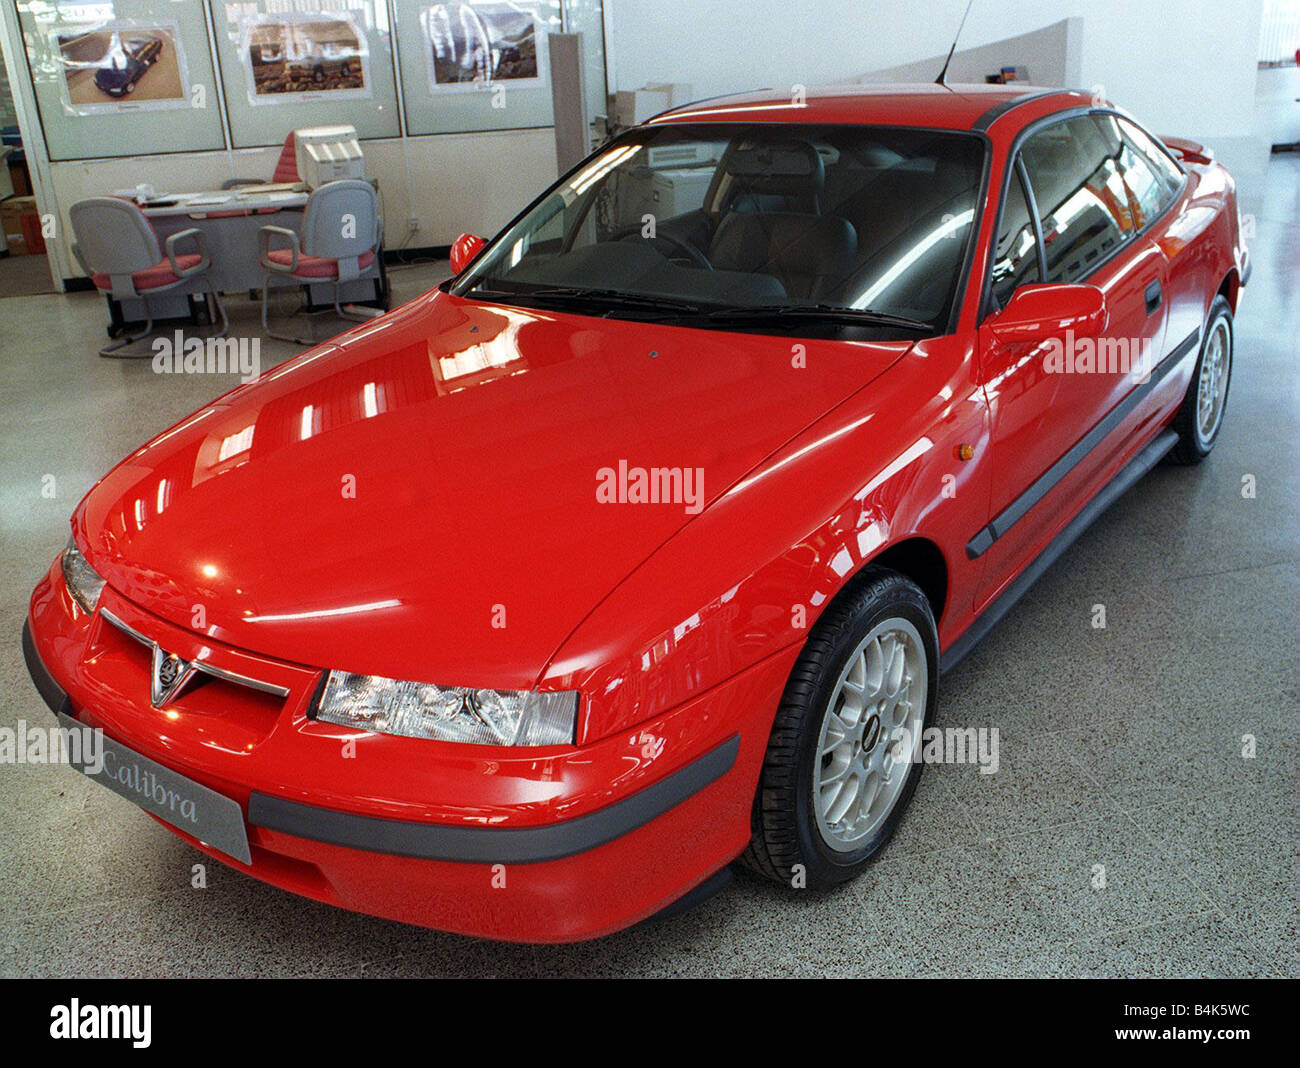 RED VAUXHALL CALIBRA CAR SEPTEMBER 1997 IN SHOWROOM Stock Photo - Alamy